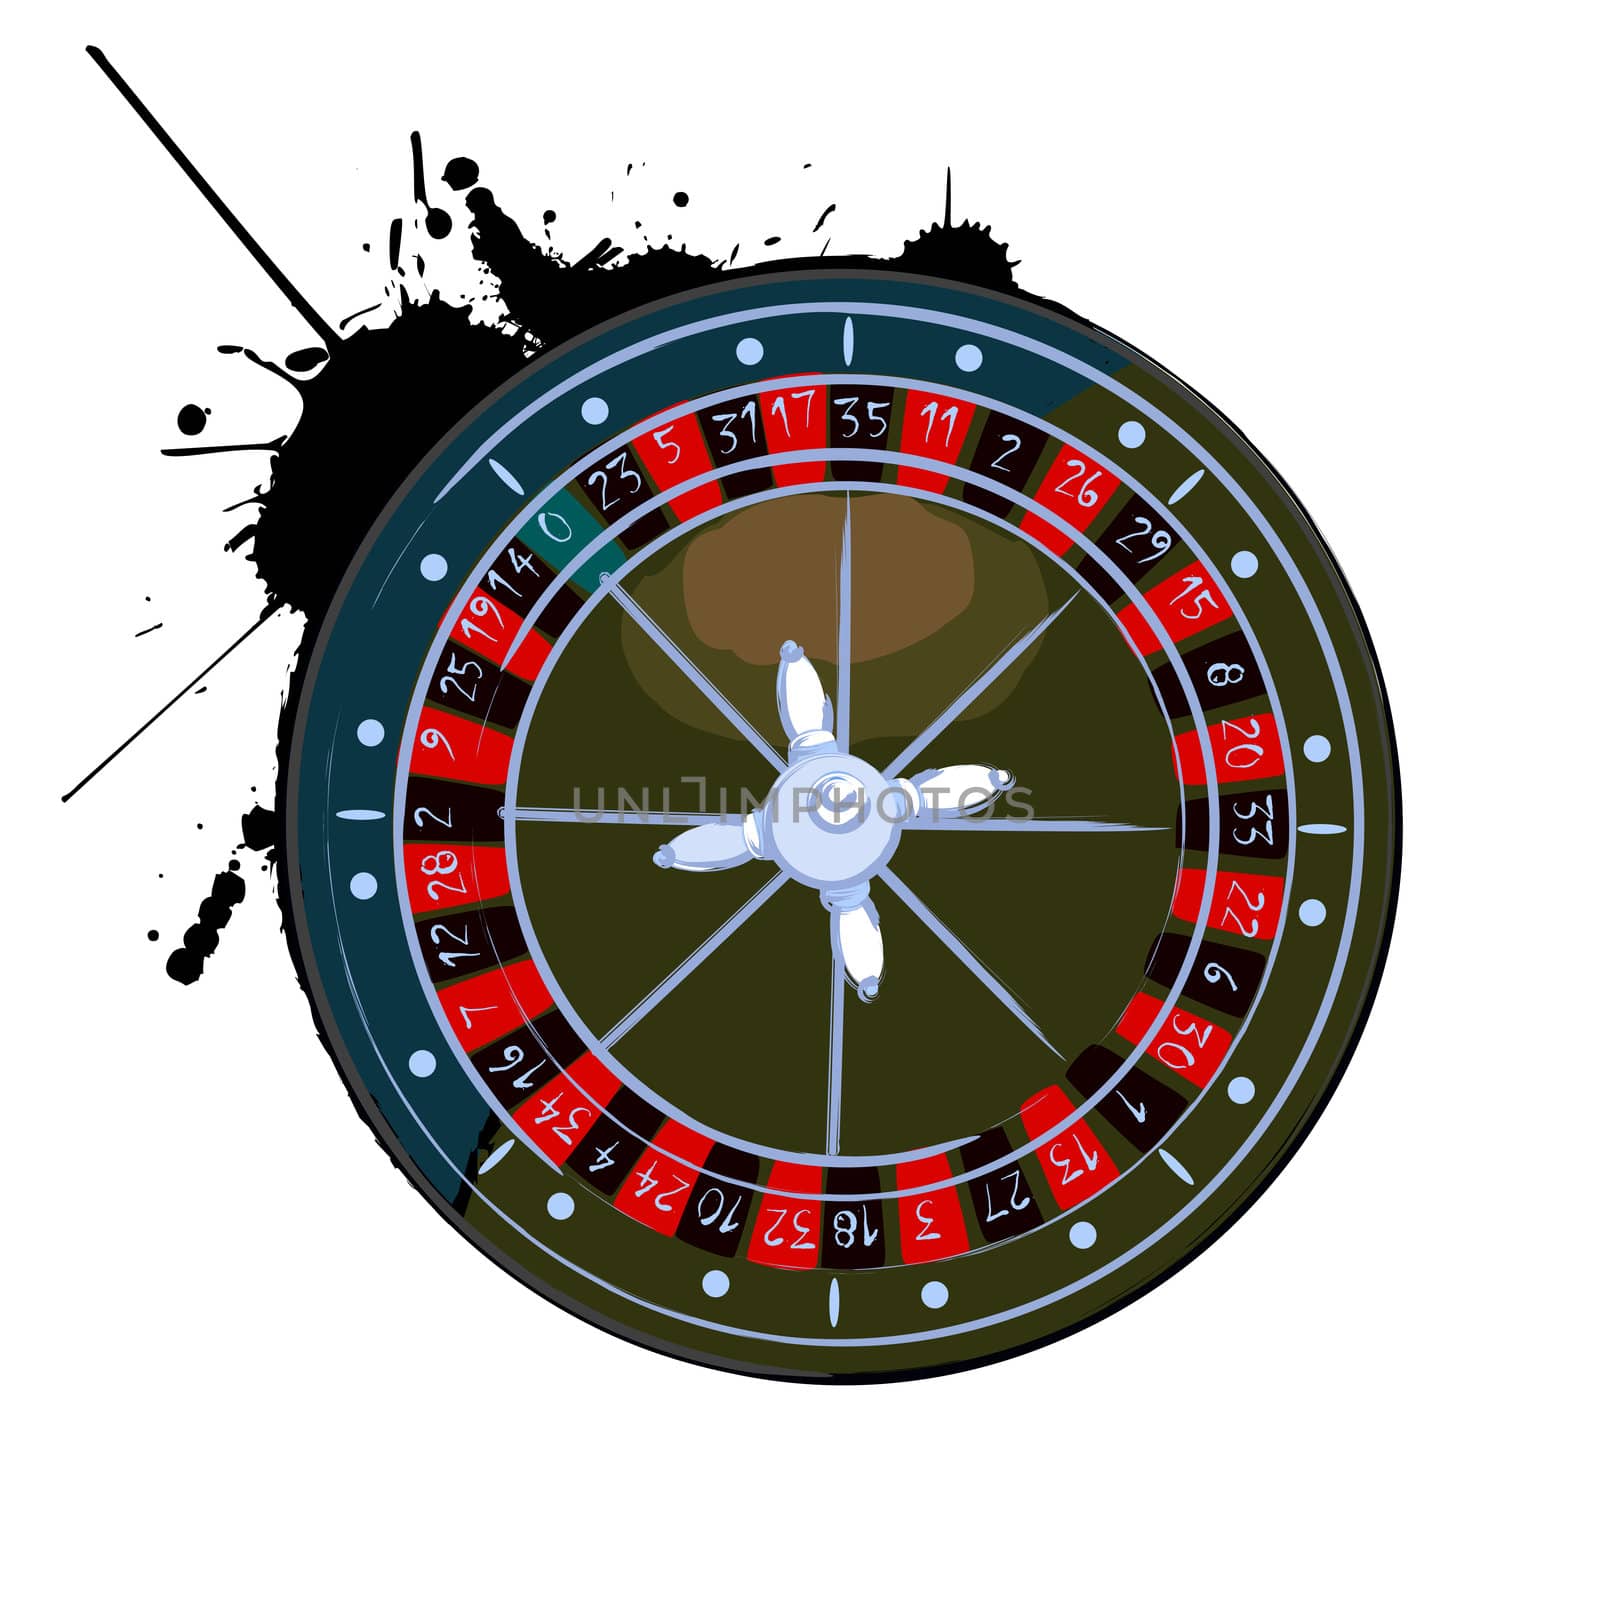 Old roulette wheel by Lirch